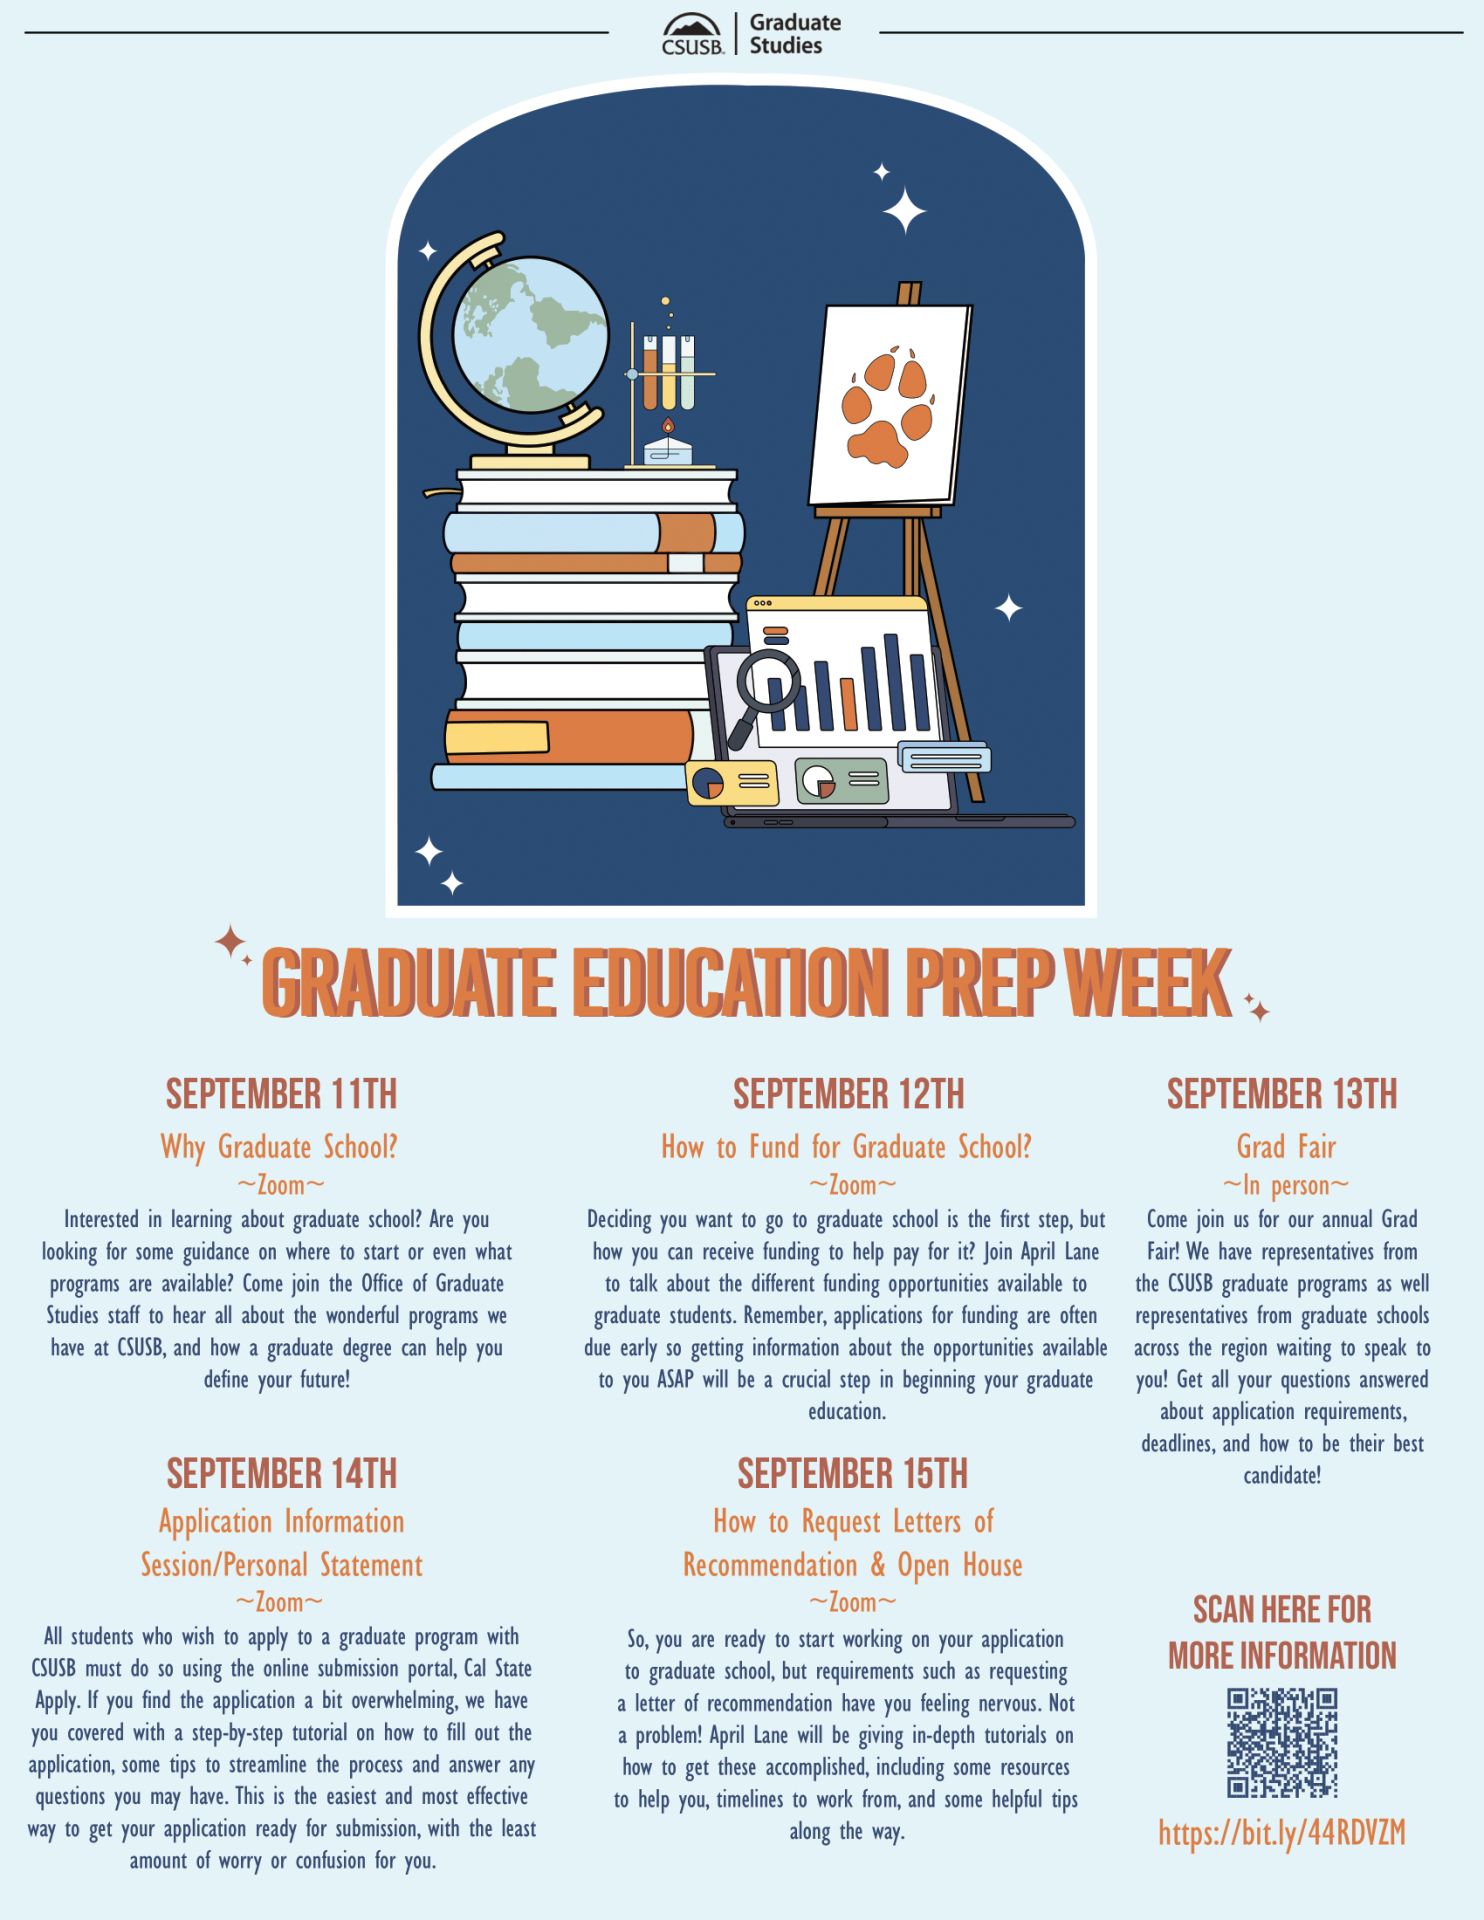 Graduate Education Prep Week Workshop Dates and Topics